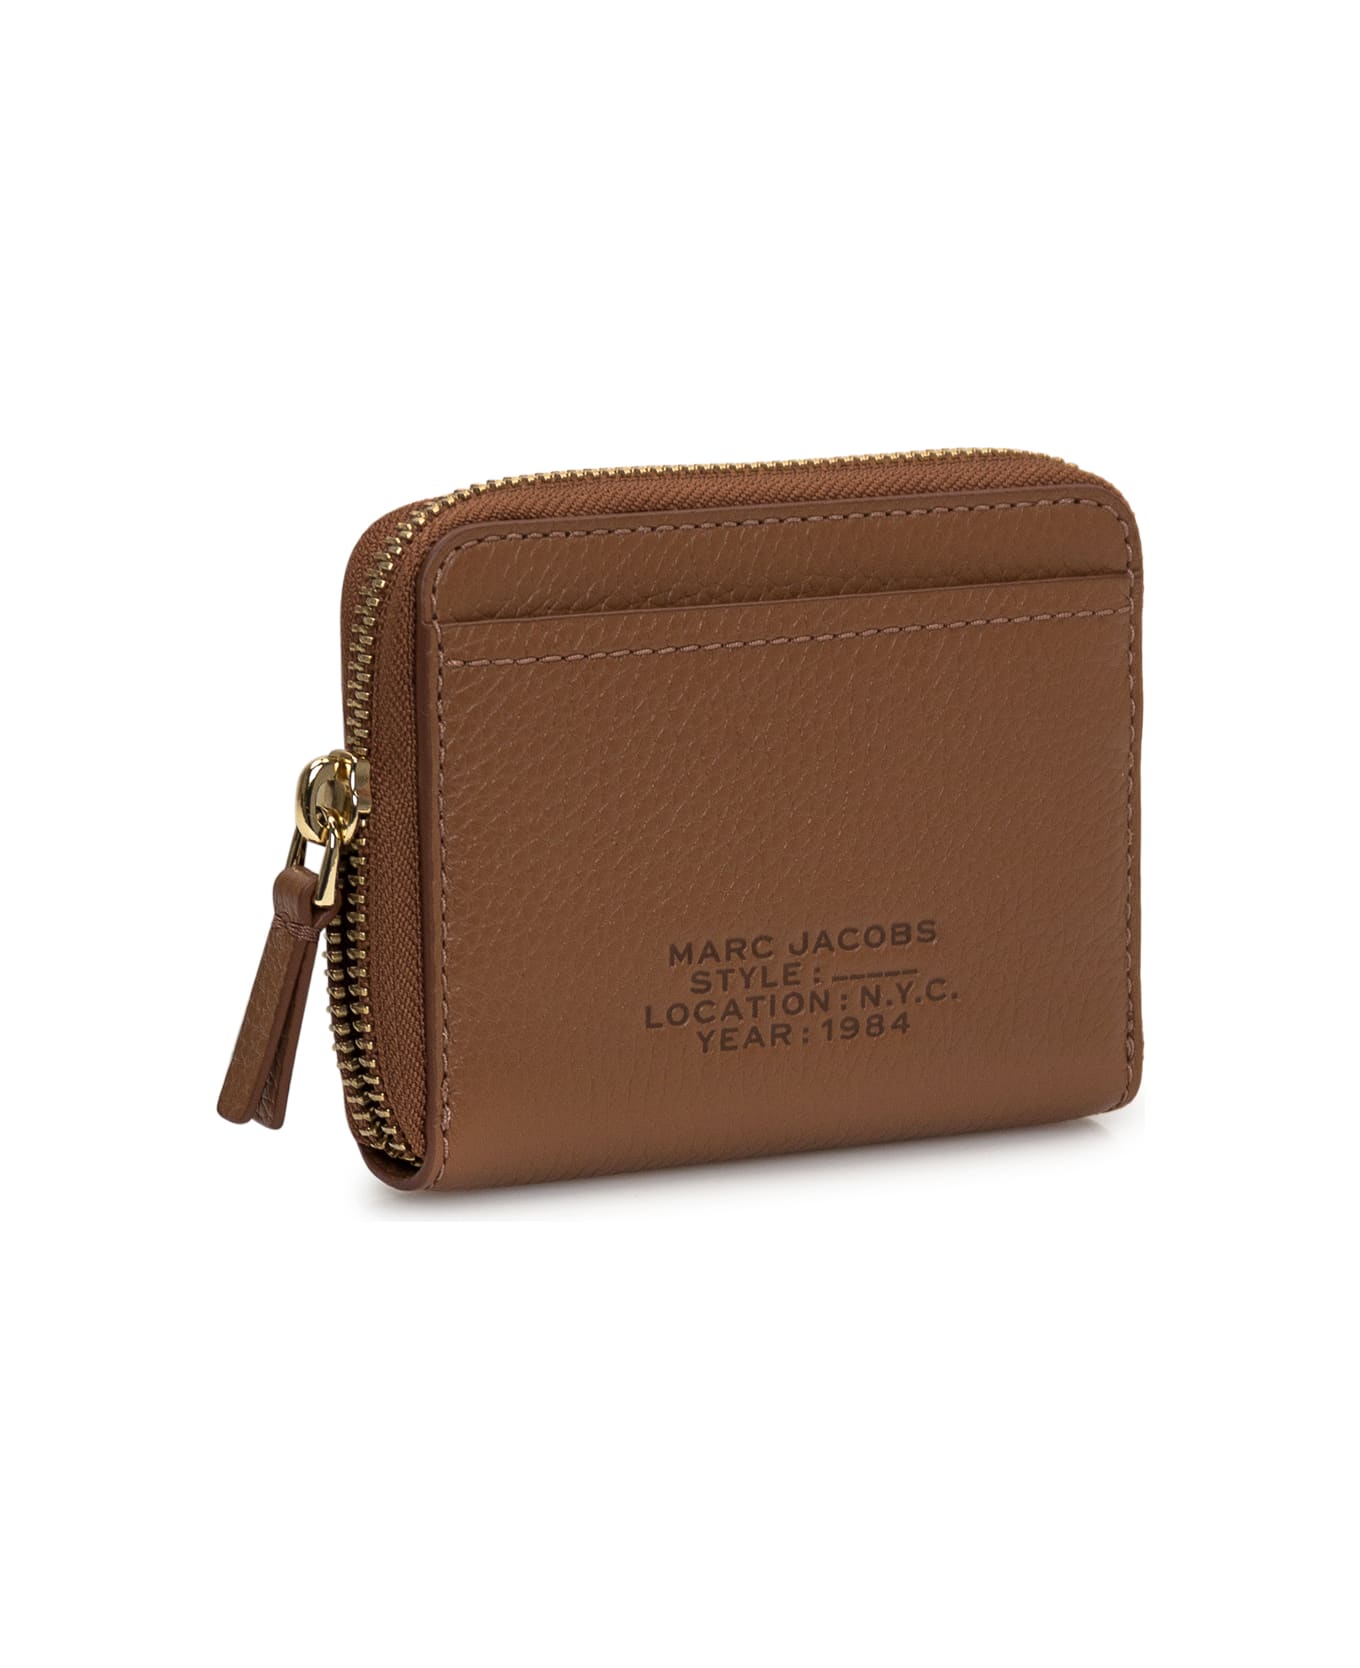 Marc Jacobs Leather Wallet With Zipper - ARGAN OIL 財布